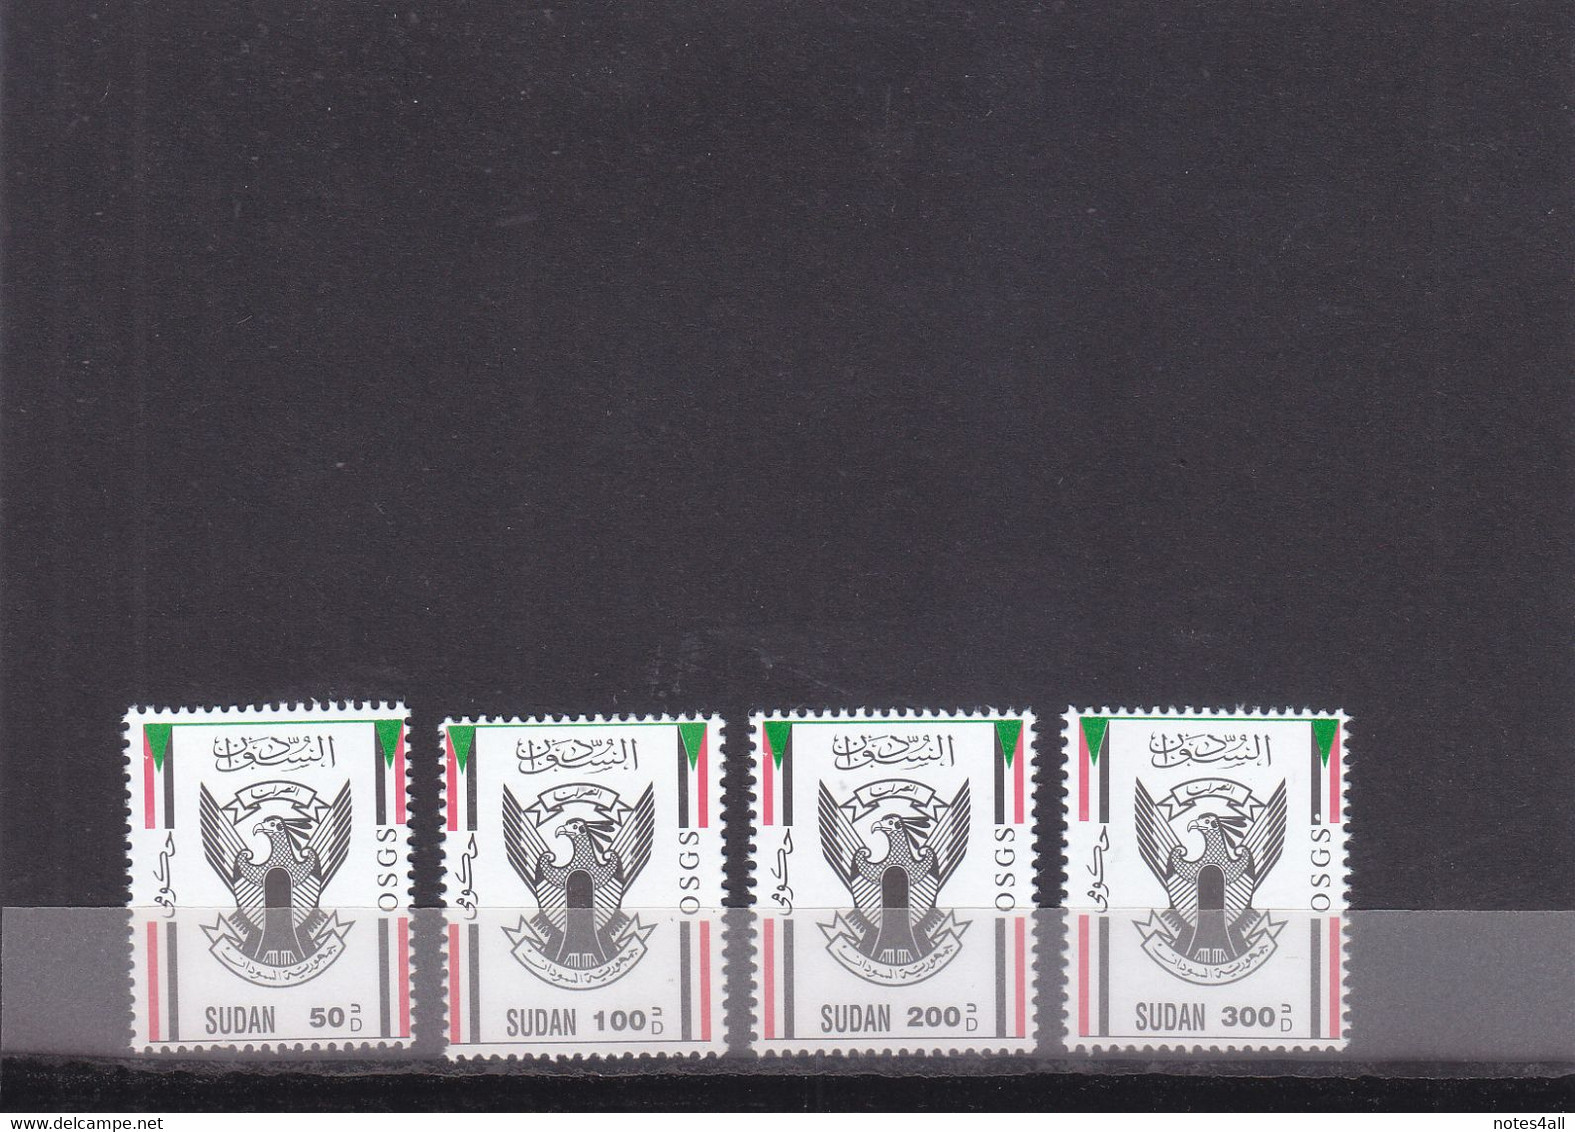 Stamps SUDAN 2003 SC O113 O116 OFFICIAL LOT X10 MNH SETS # 54 - Sudan (1954-...)